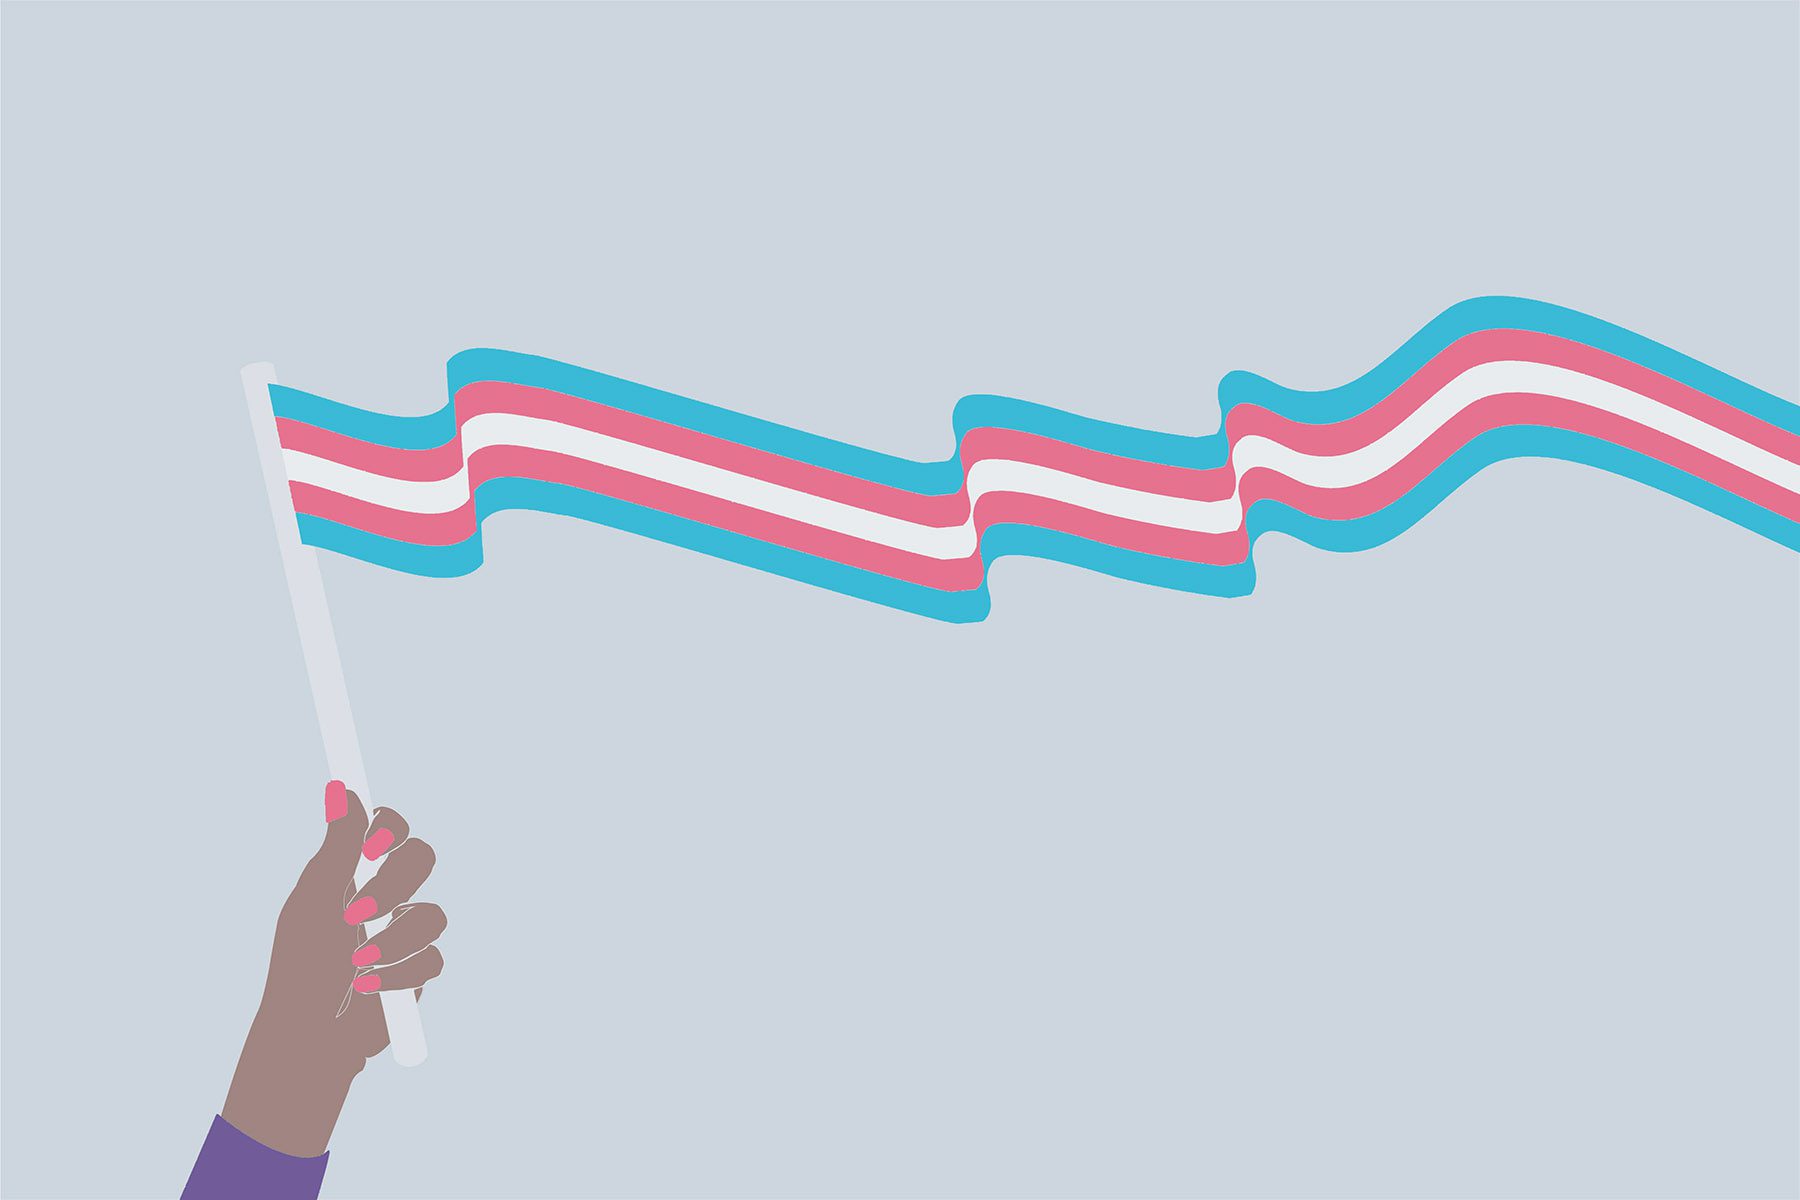 An illustration shows a hand holding a transgender pride flag